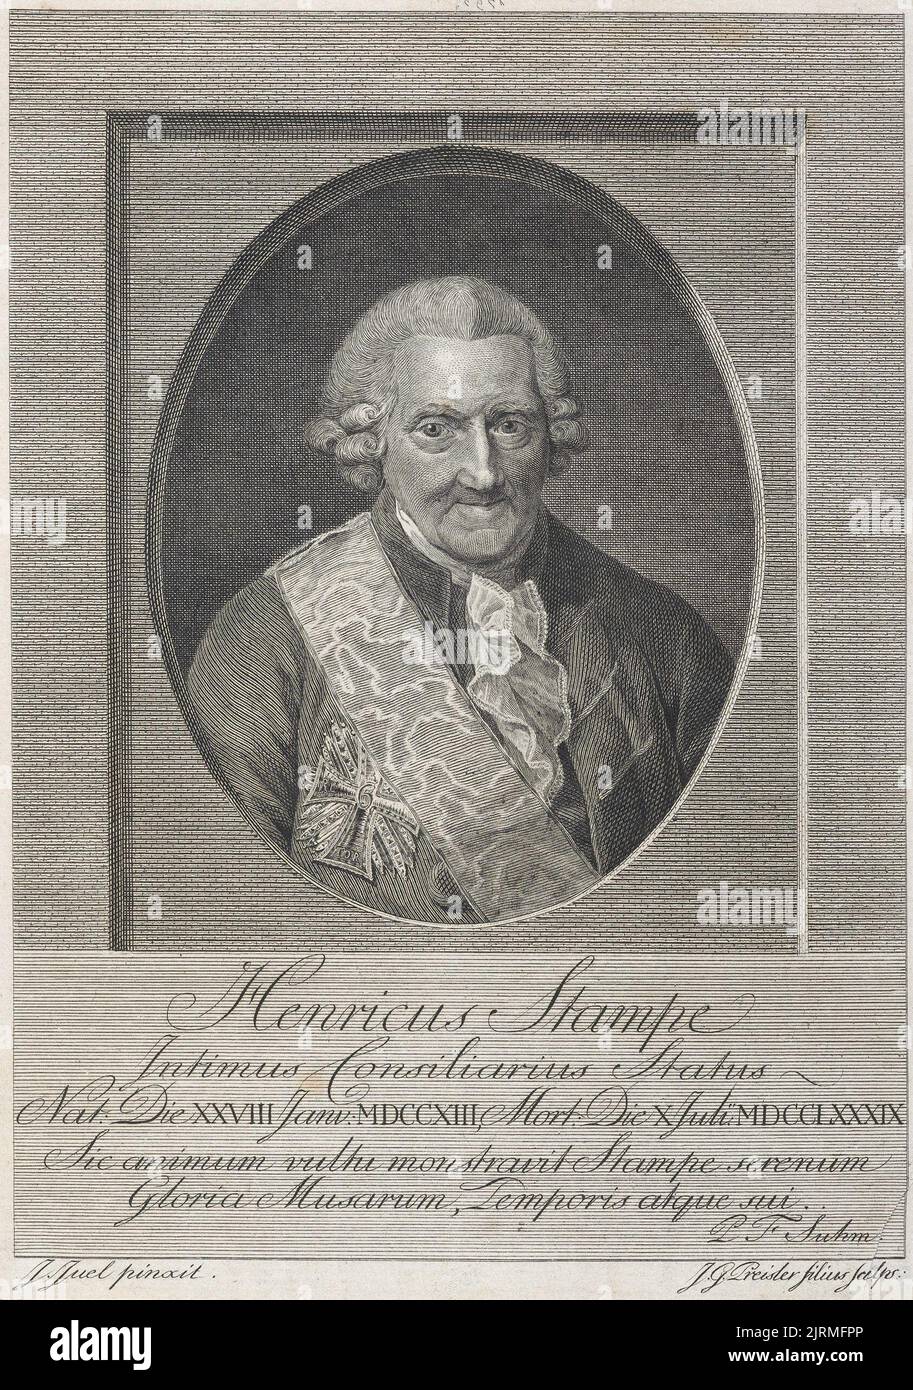 Henrik Stampe, 1793, Denmark, by Johan Preissler, Jens Juel. Gift of Bishop Monrad, 1869. Stock Photo